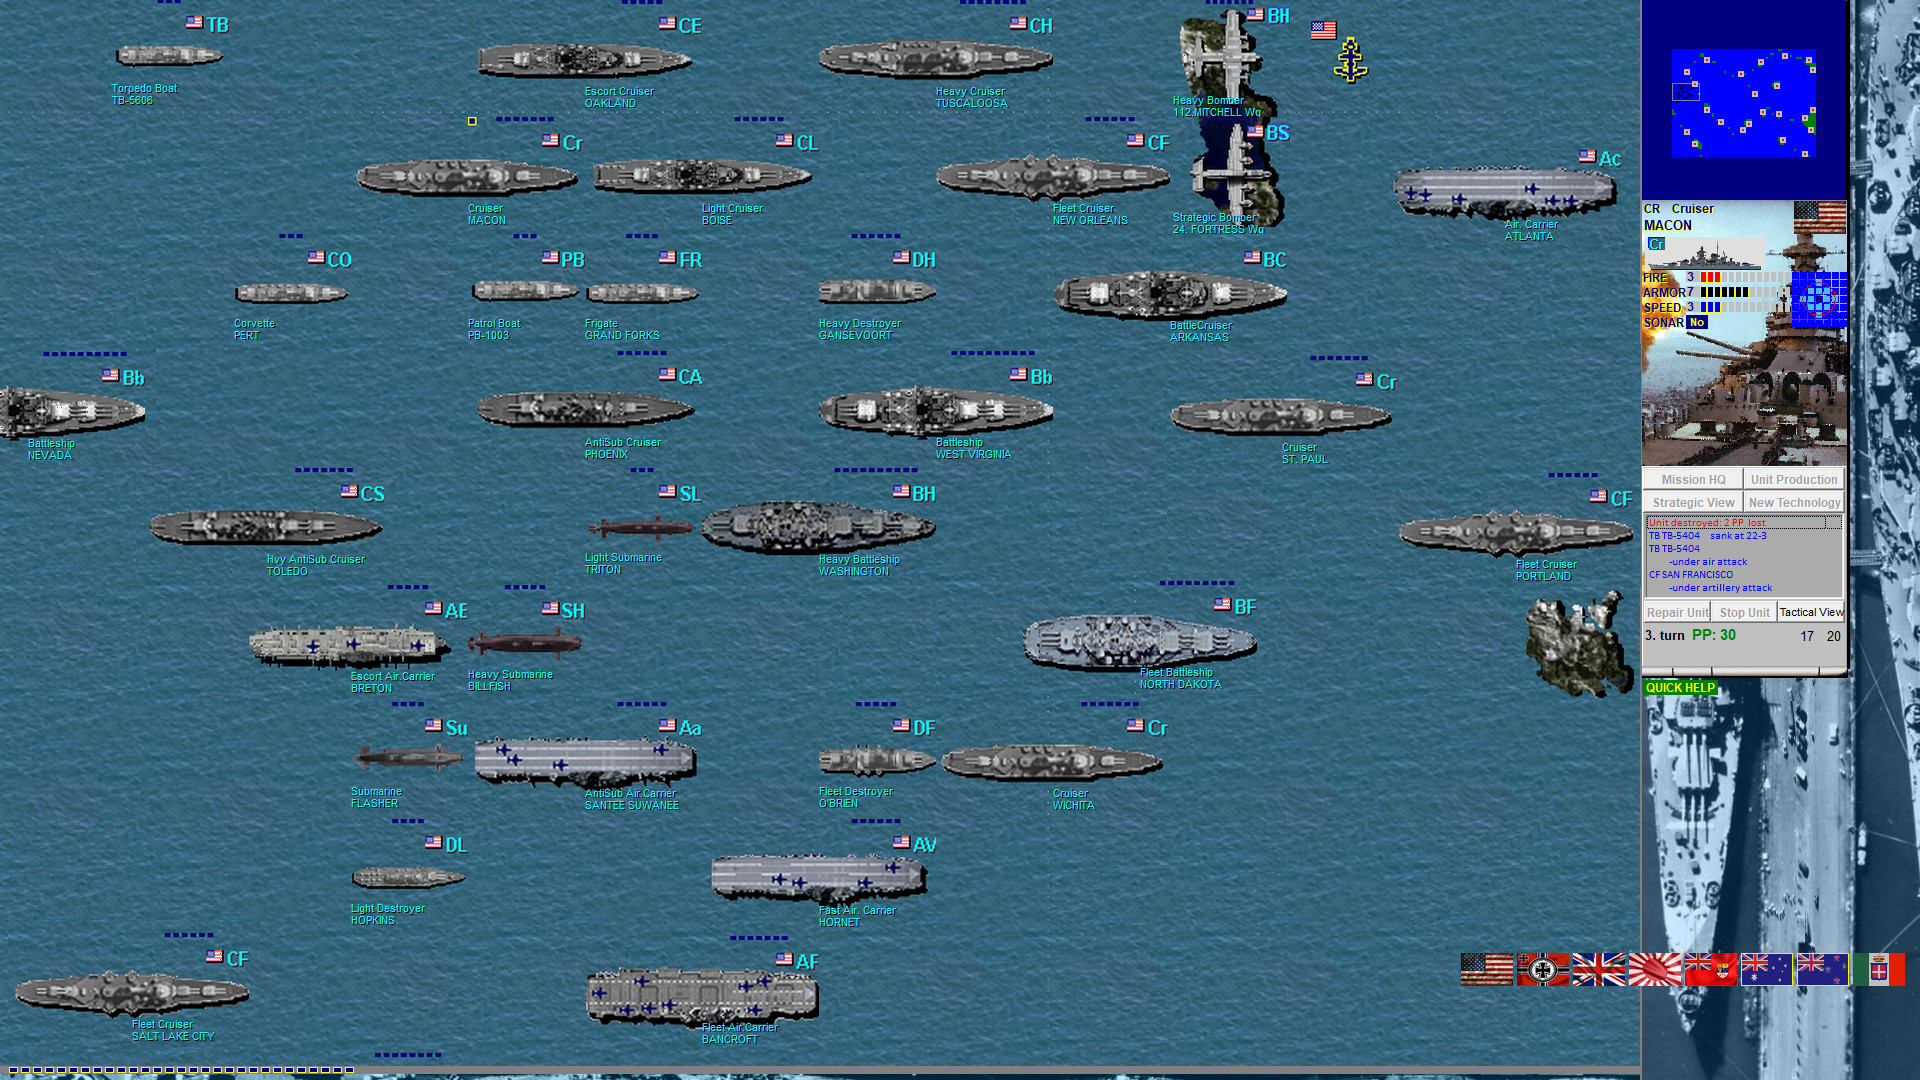 battleship game online free multiplayer